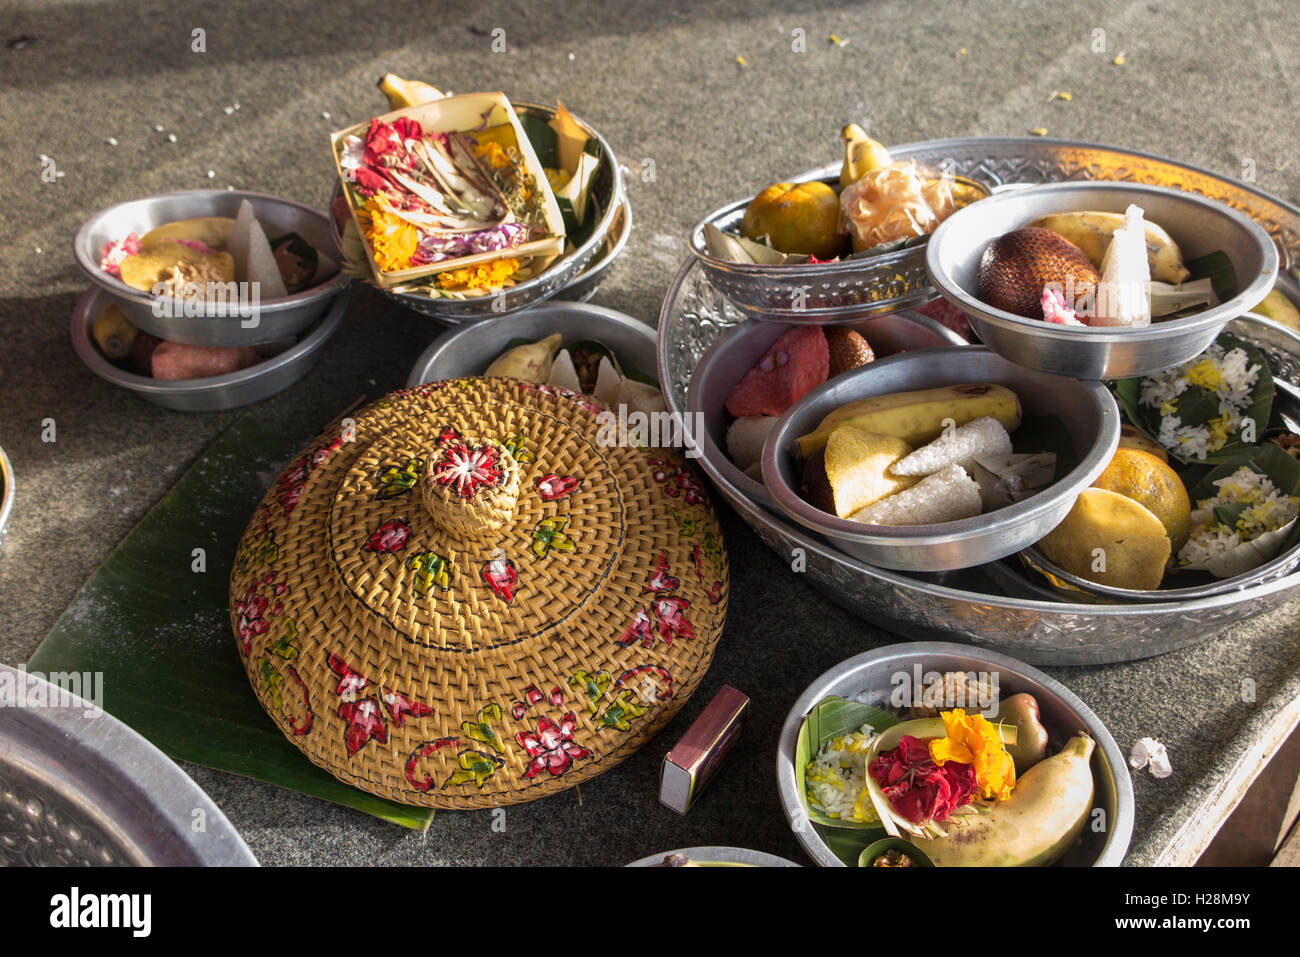 Indonesia, Bali, Batur, Pura Ulun Danu Batur, Kuningan festival offerings in metal bowls Stock Photo